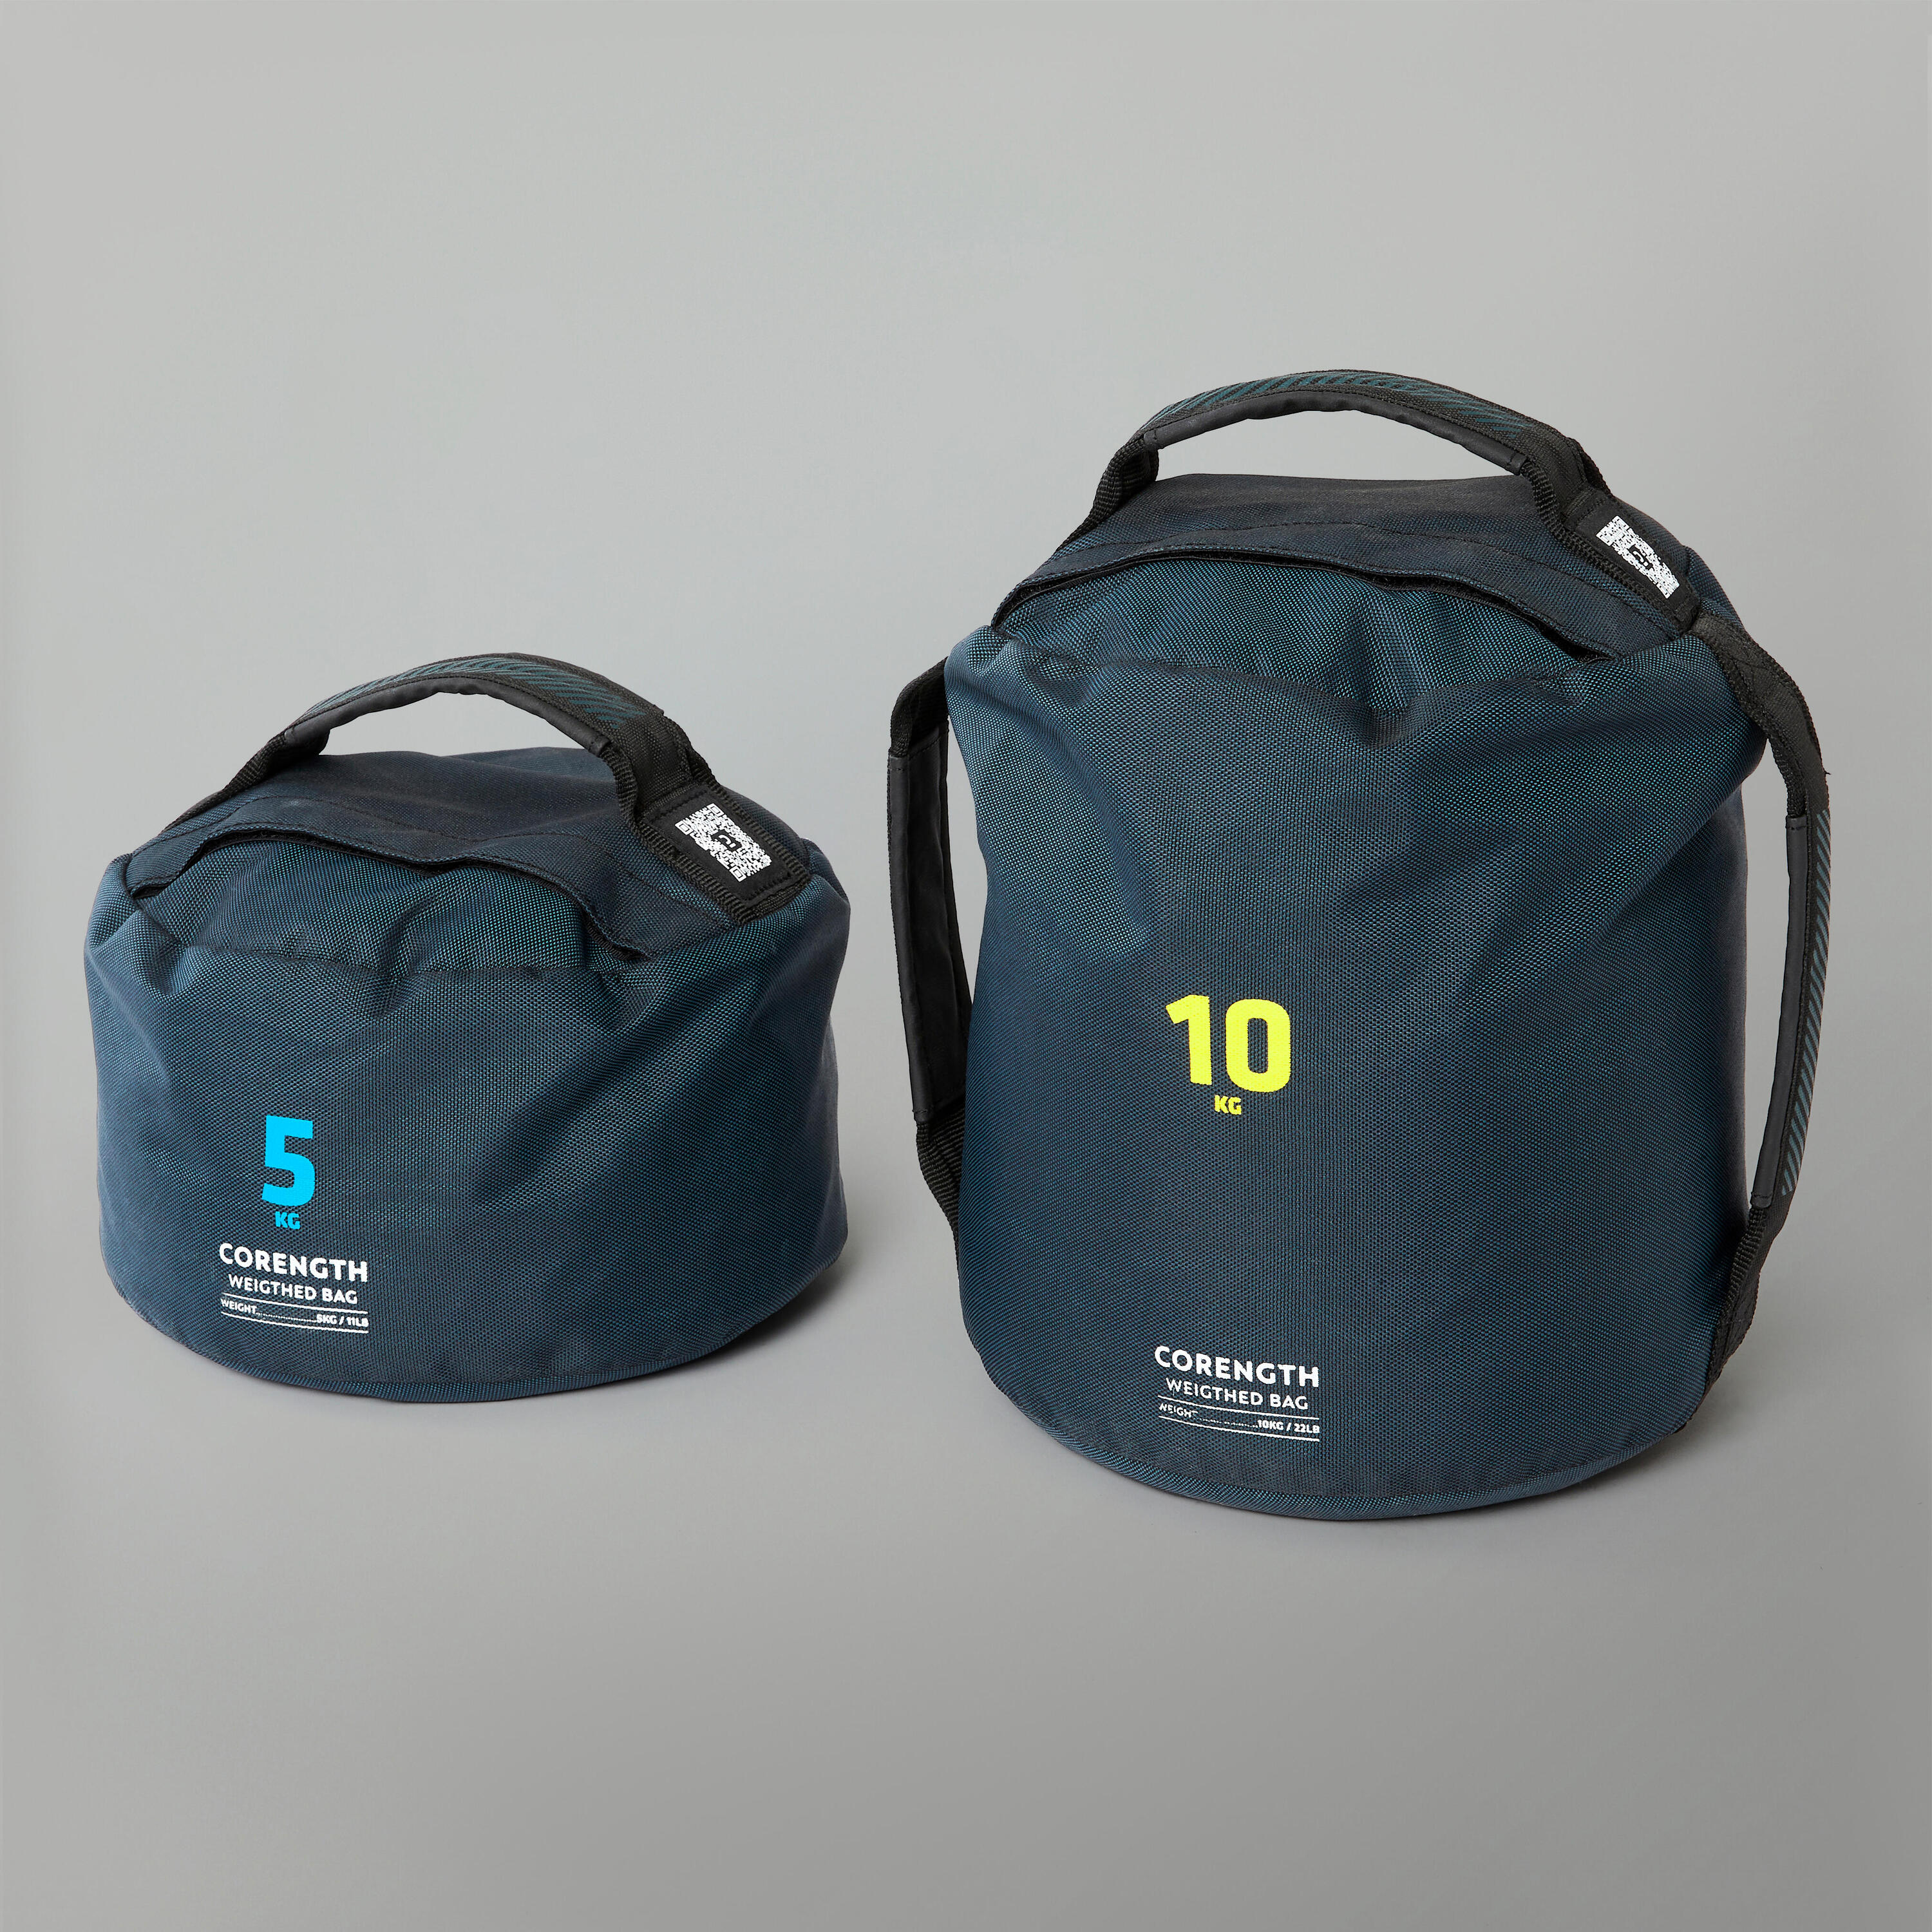 Cross-Training Weighted Bag / Soft Kettlebell - 10 kg 4/4